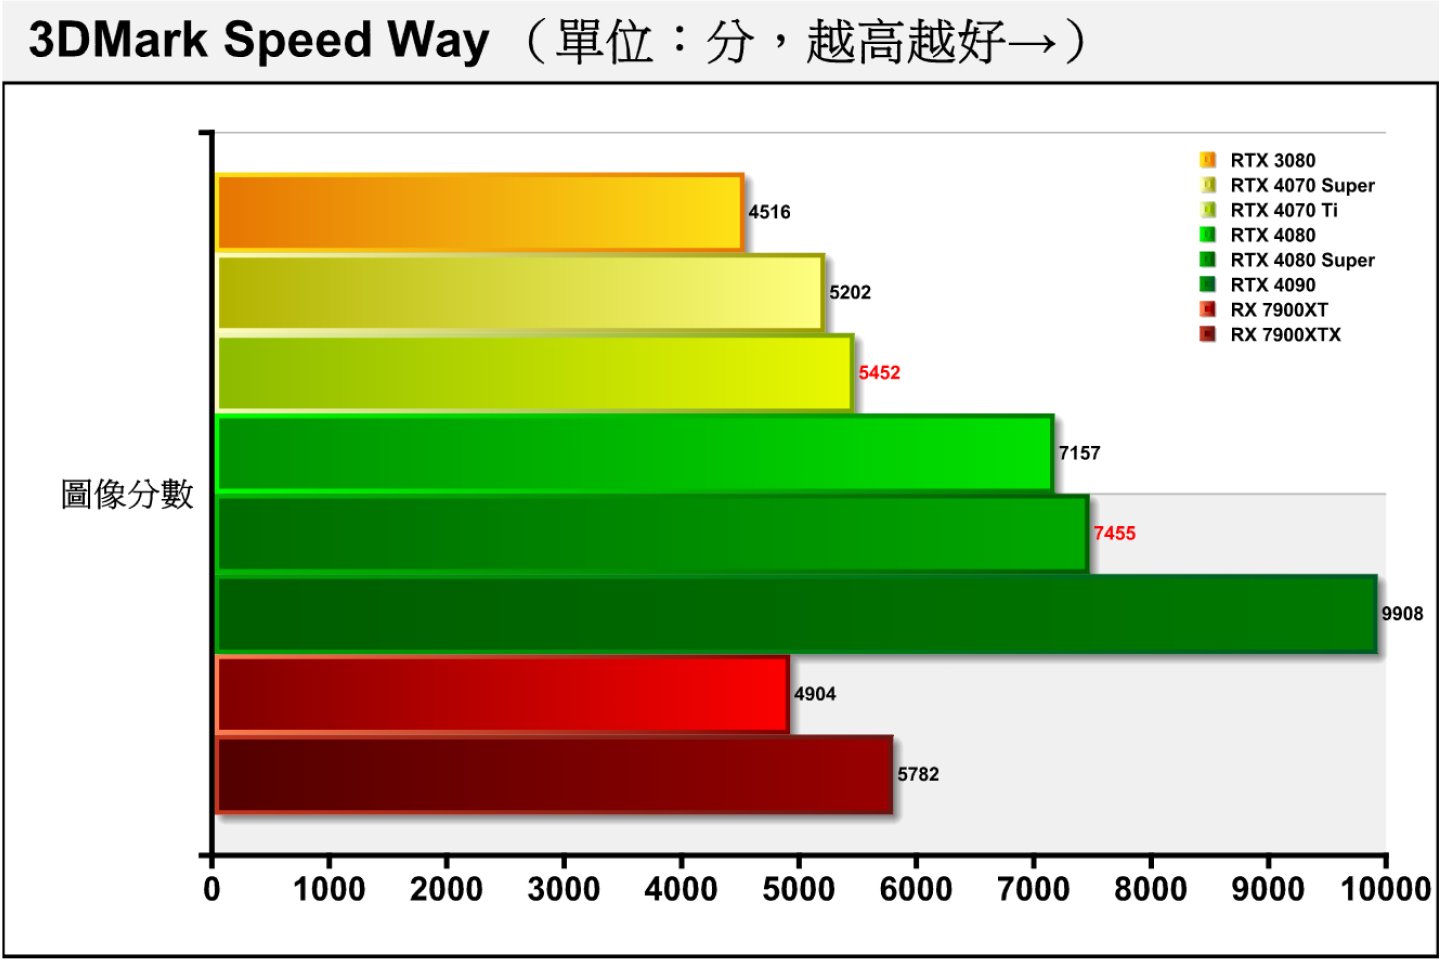 Speed Way是採用DirectX 12 Ultimate繪API與DirectX Raytracing tier 1.1光線追蹤技術，具有全域照明與反射效果，並透過Mesh Shaders進行效能最佳化，可以反映最新AAA大作遊戲的效能表現。RTX 4080 Super成績領先RTX 4080約4.16%。